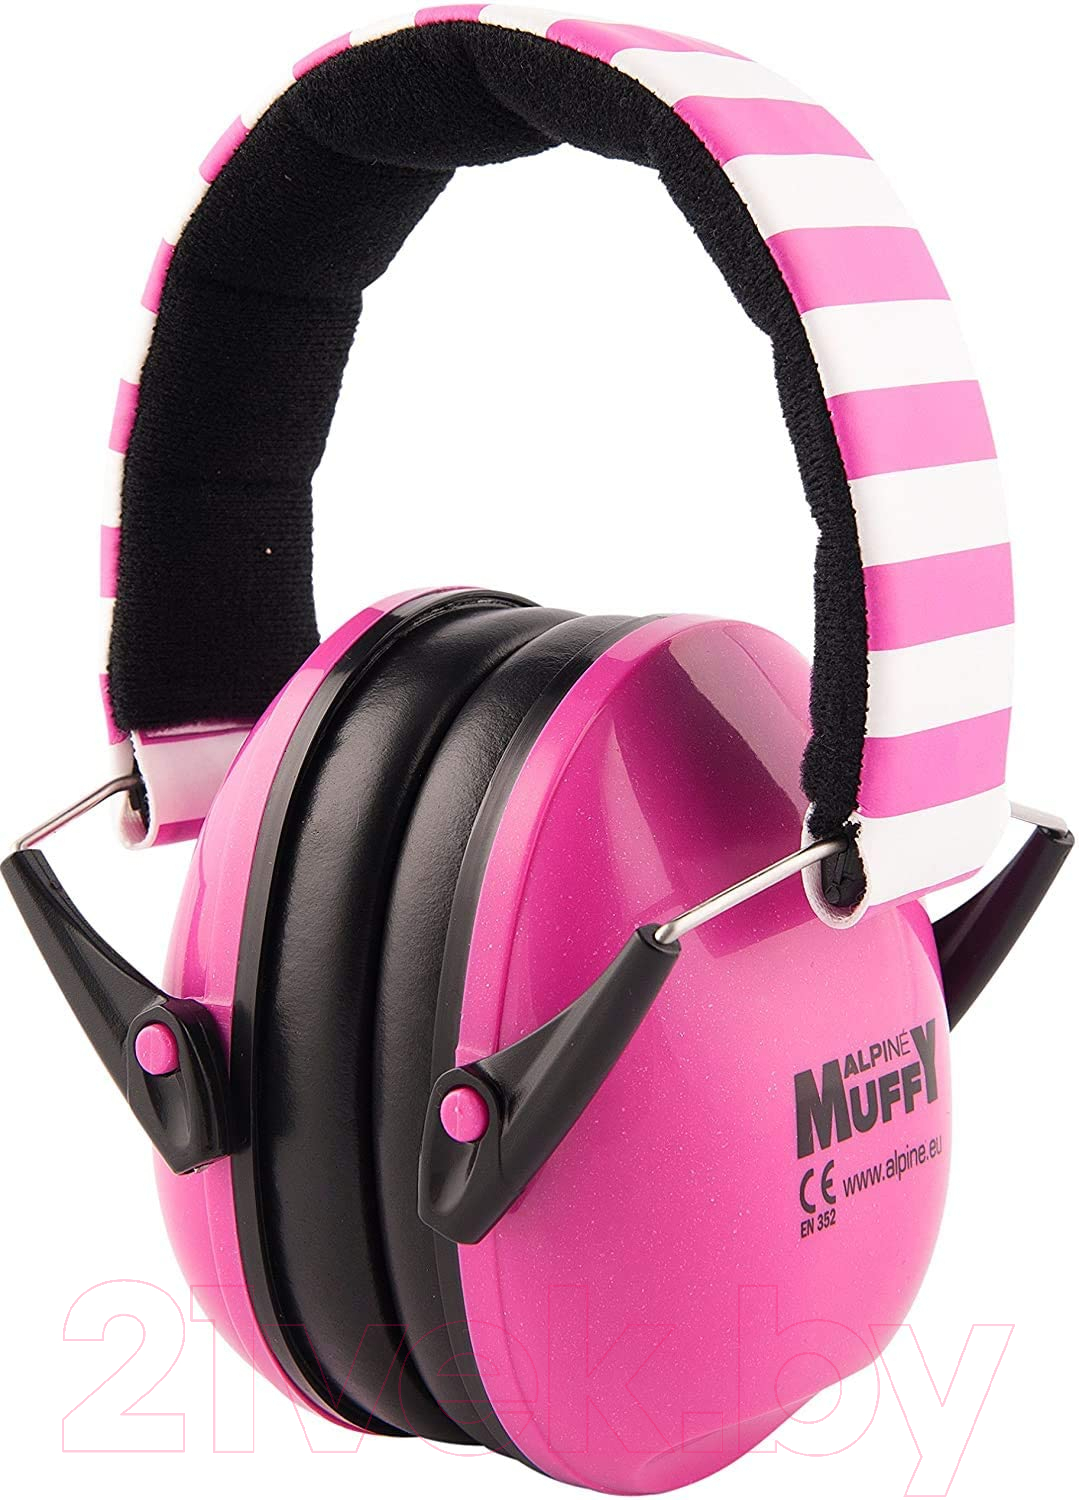 Защита для ушей ребенка Alpine Hearing Protection Muffy / 111.82.321 (розовый)